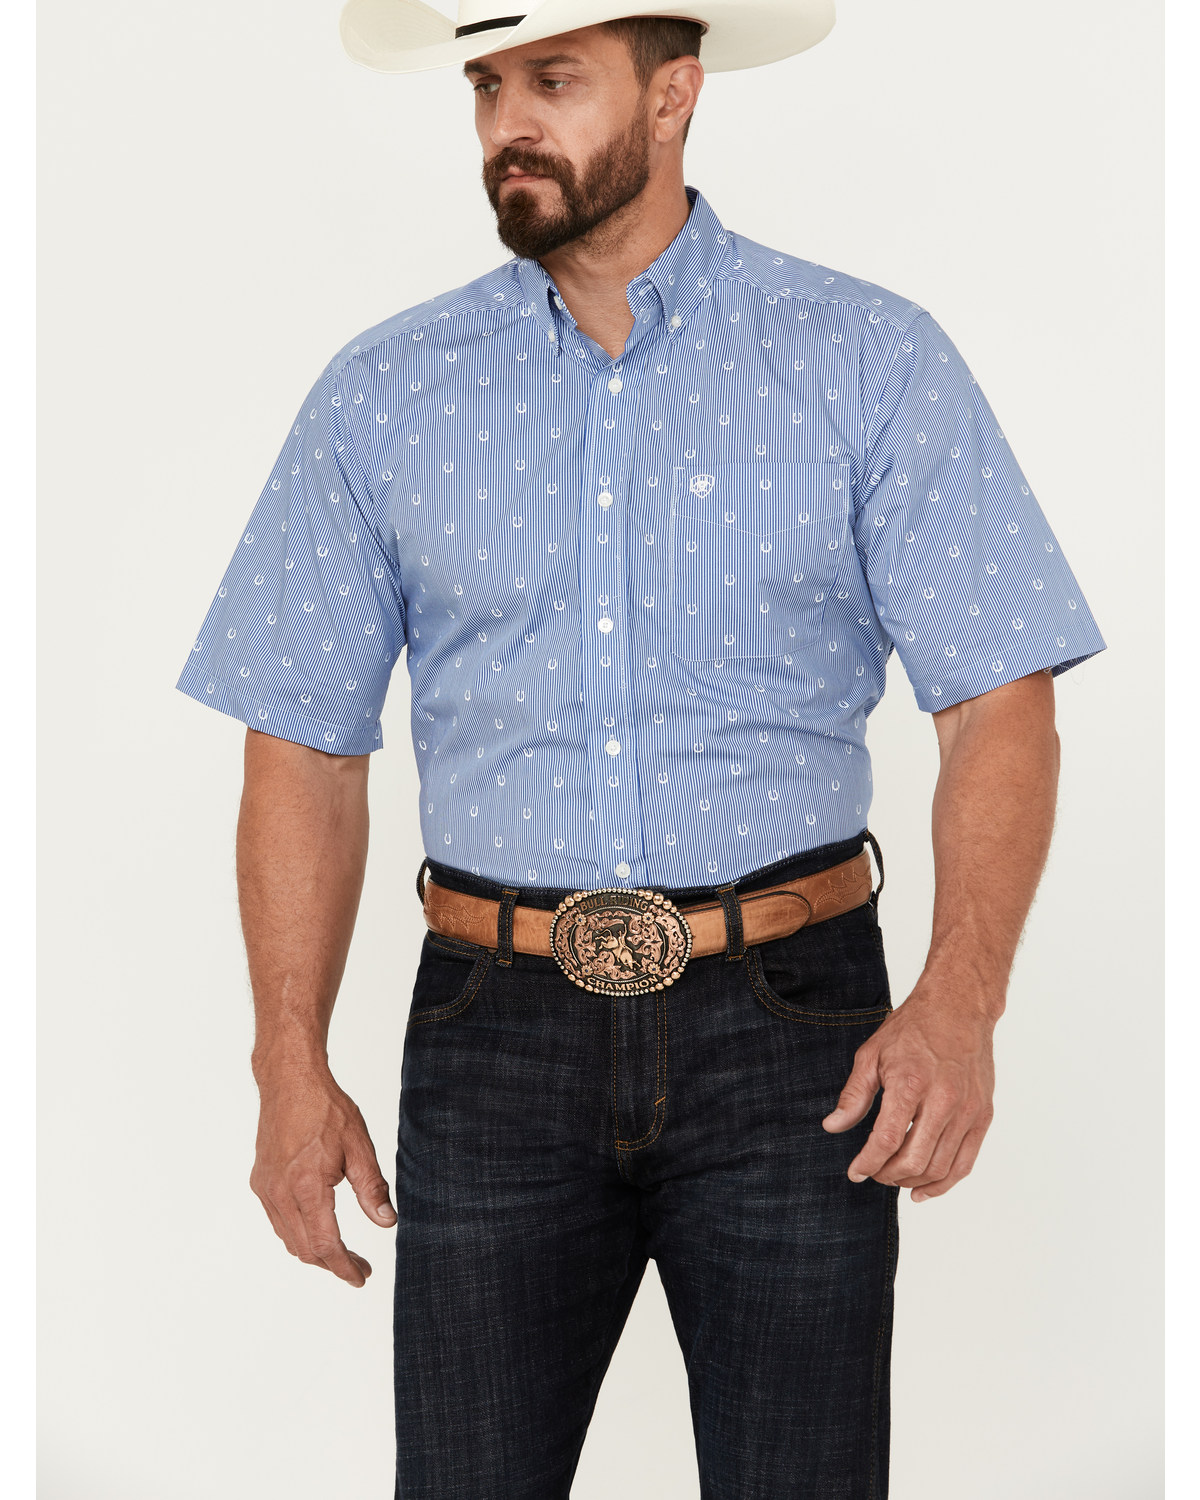 Ariat Men's Javier Print Button-Down Short Sleeve Western Shirt